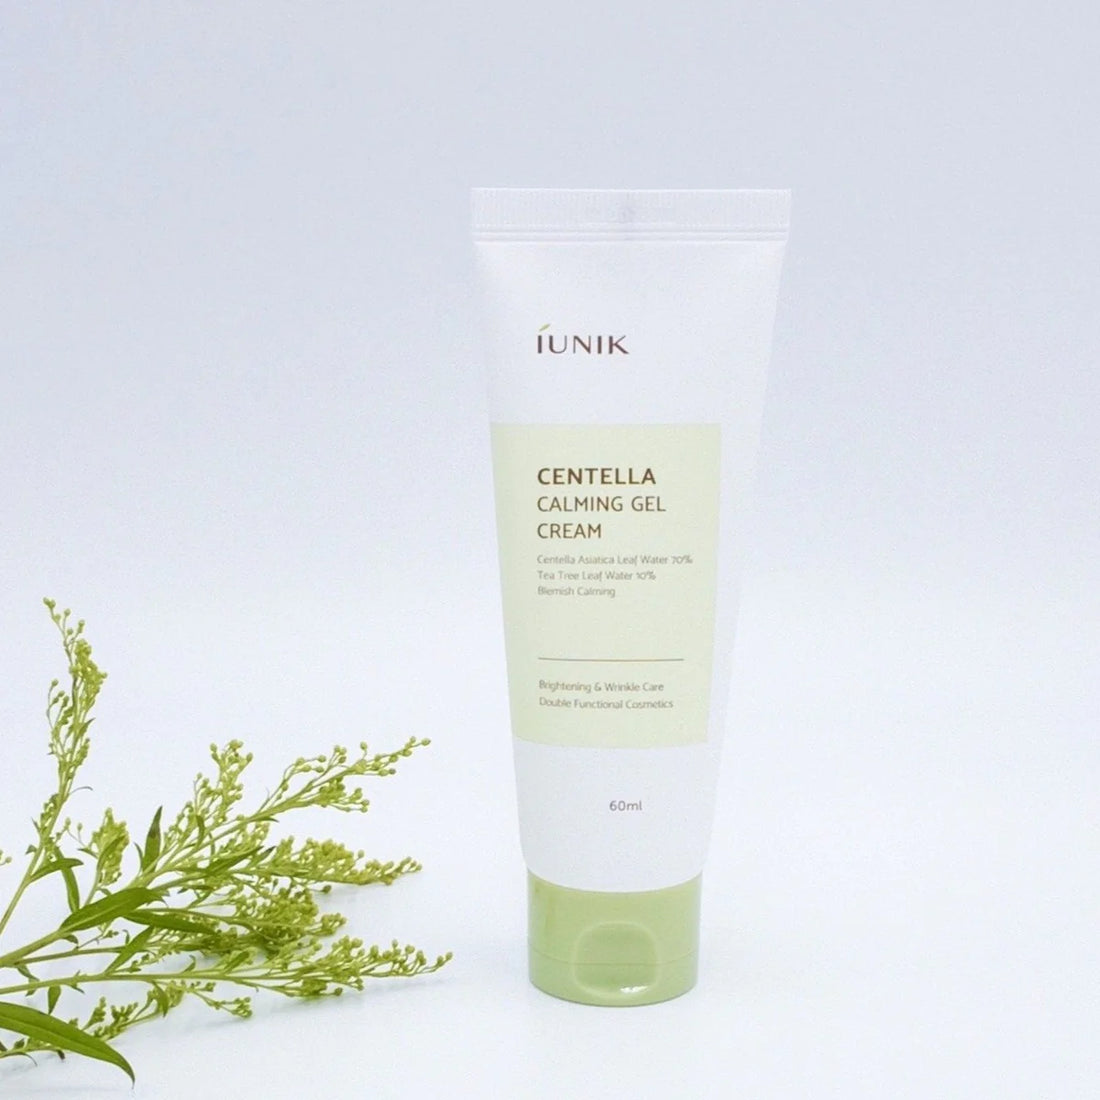 iUNIK Centella Calming Gel Cream 60ml: Calming and Moisturizing Cream for Sensitive Skin at Atelier de Glow